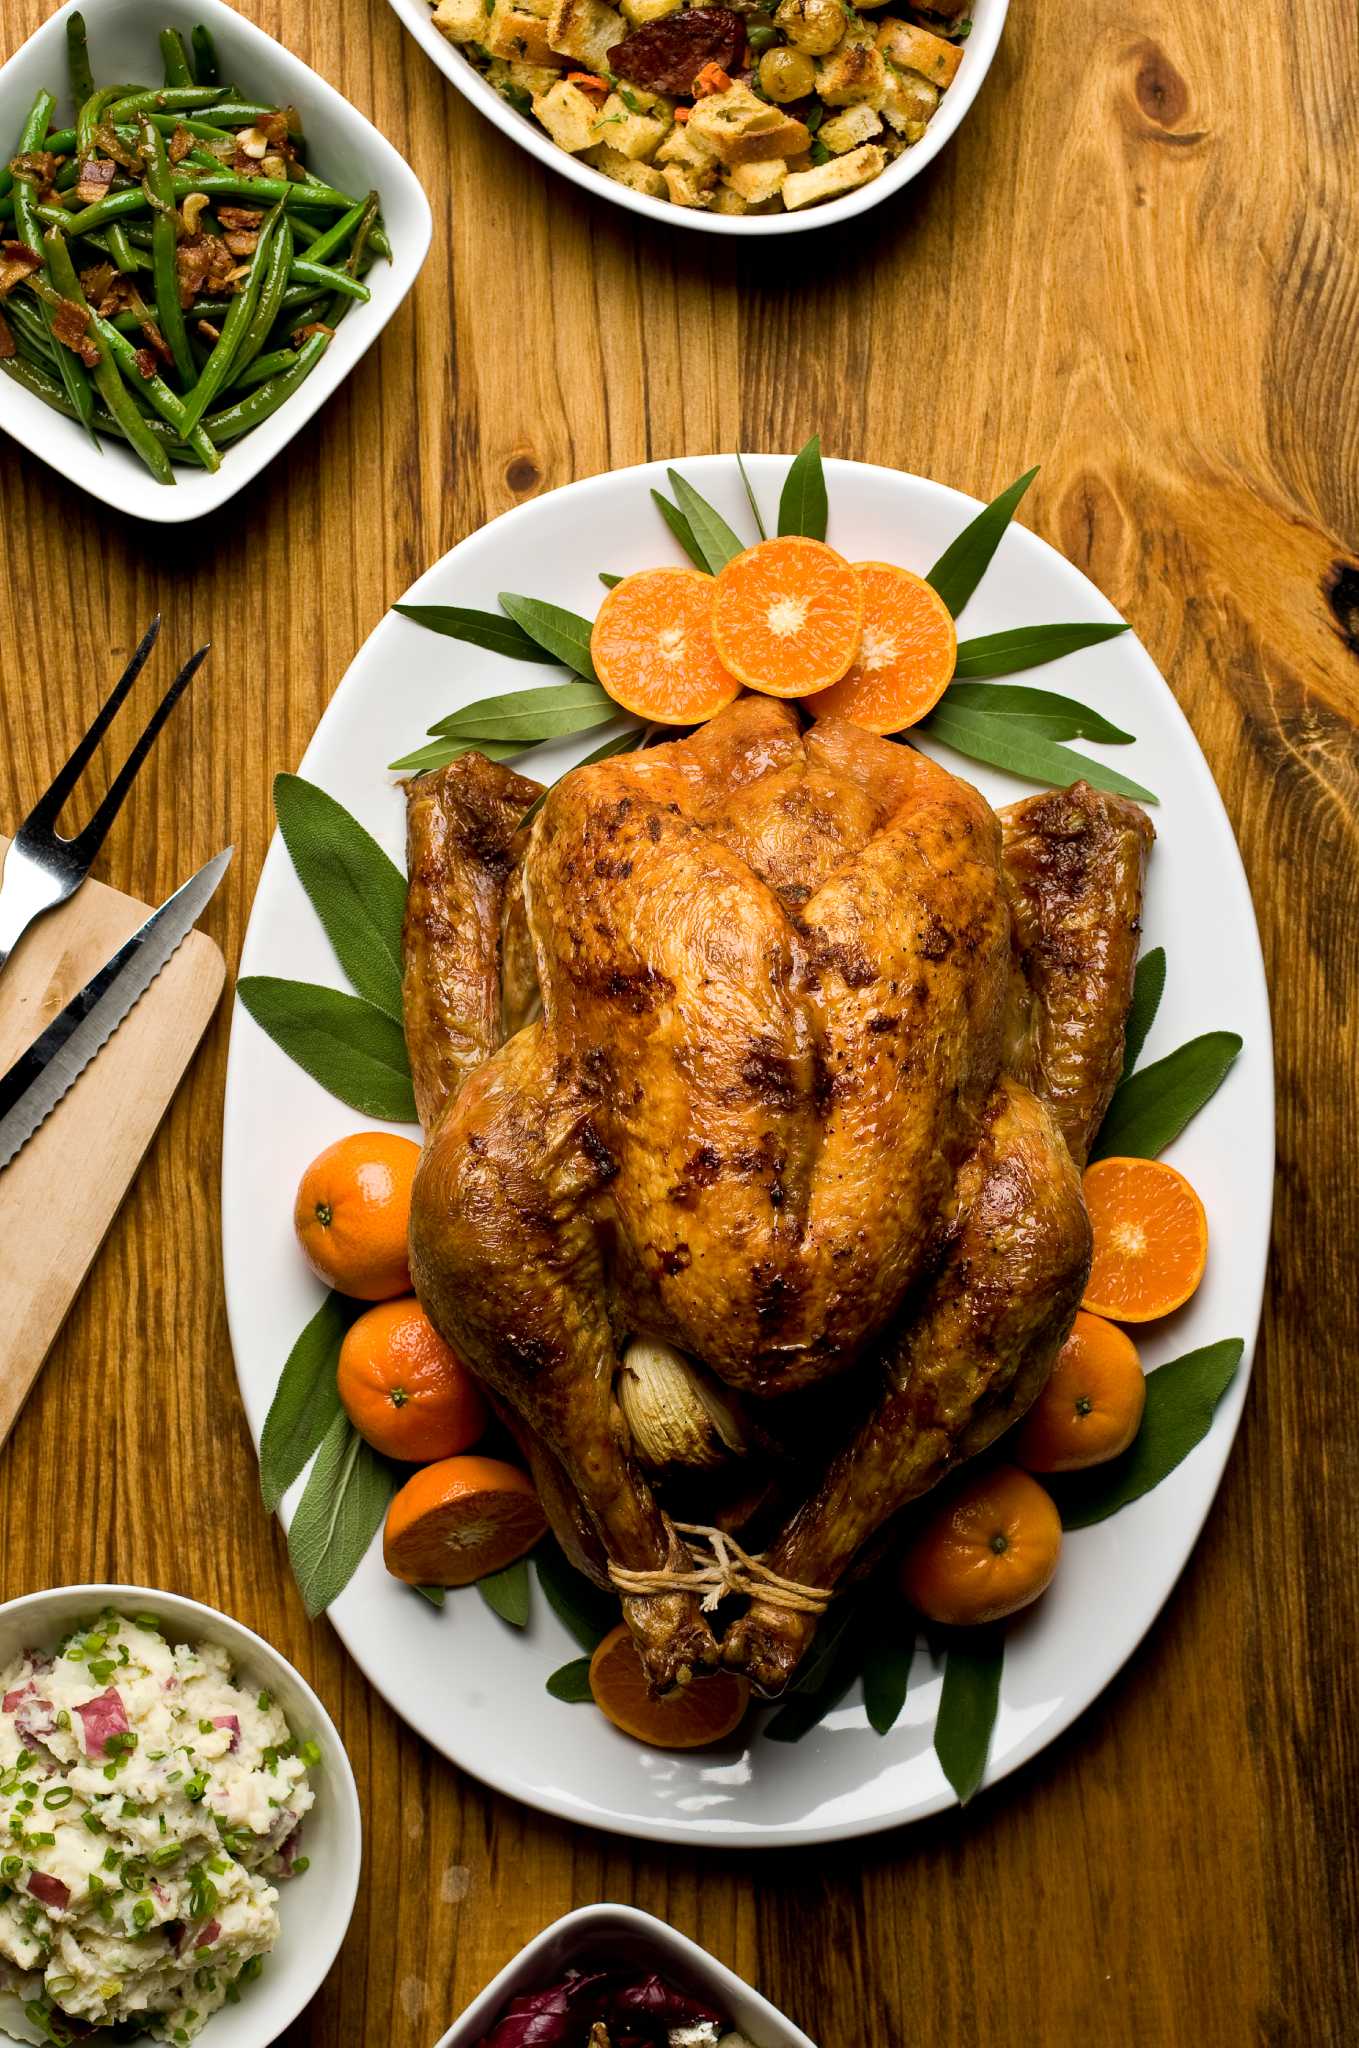 Tips for roasting turkey